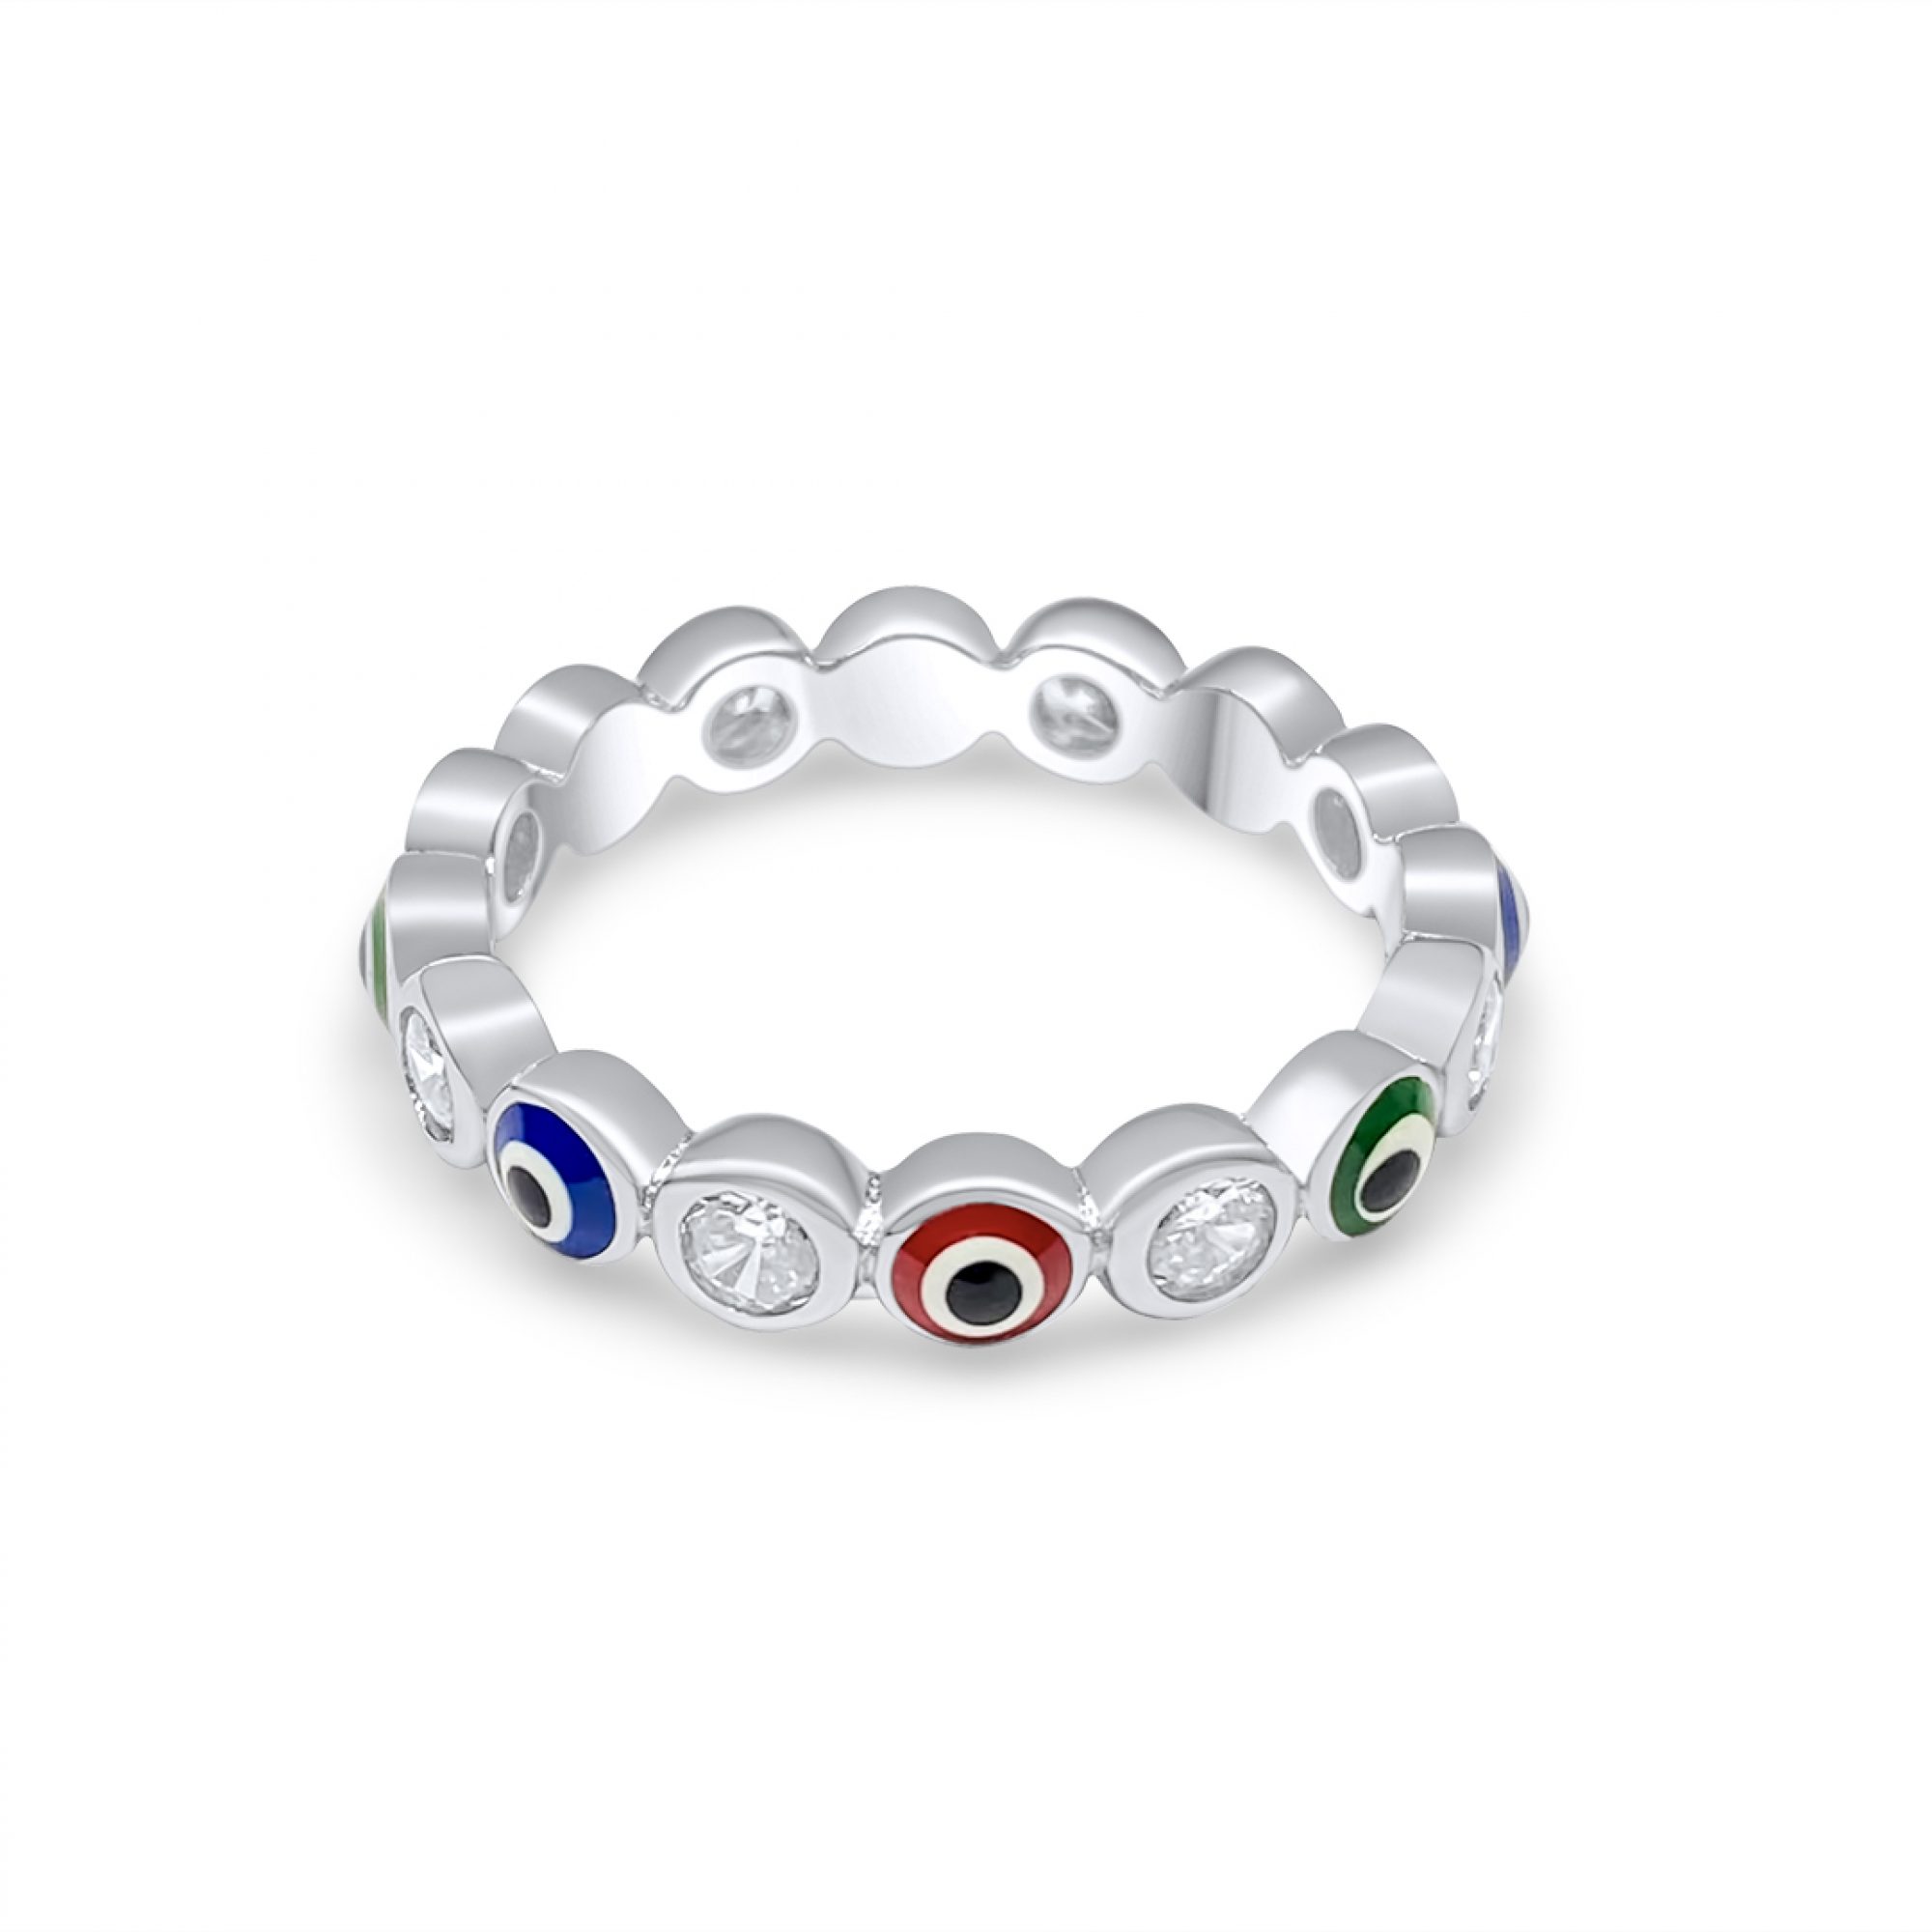 Multi coloured eye ring with zircon stones